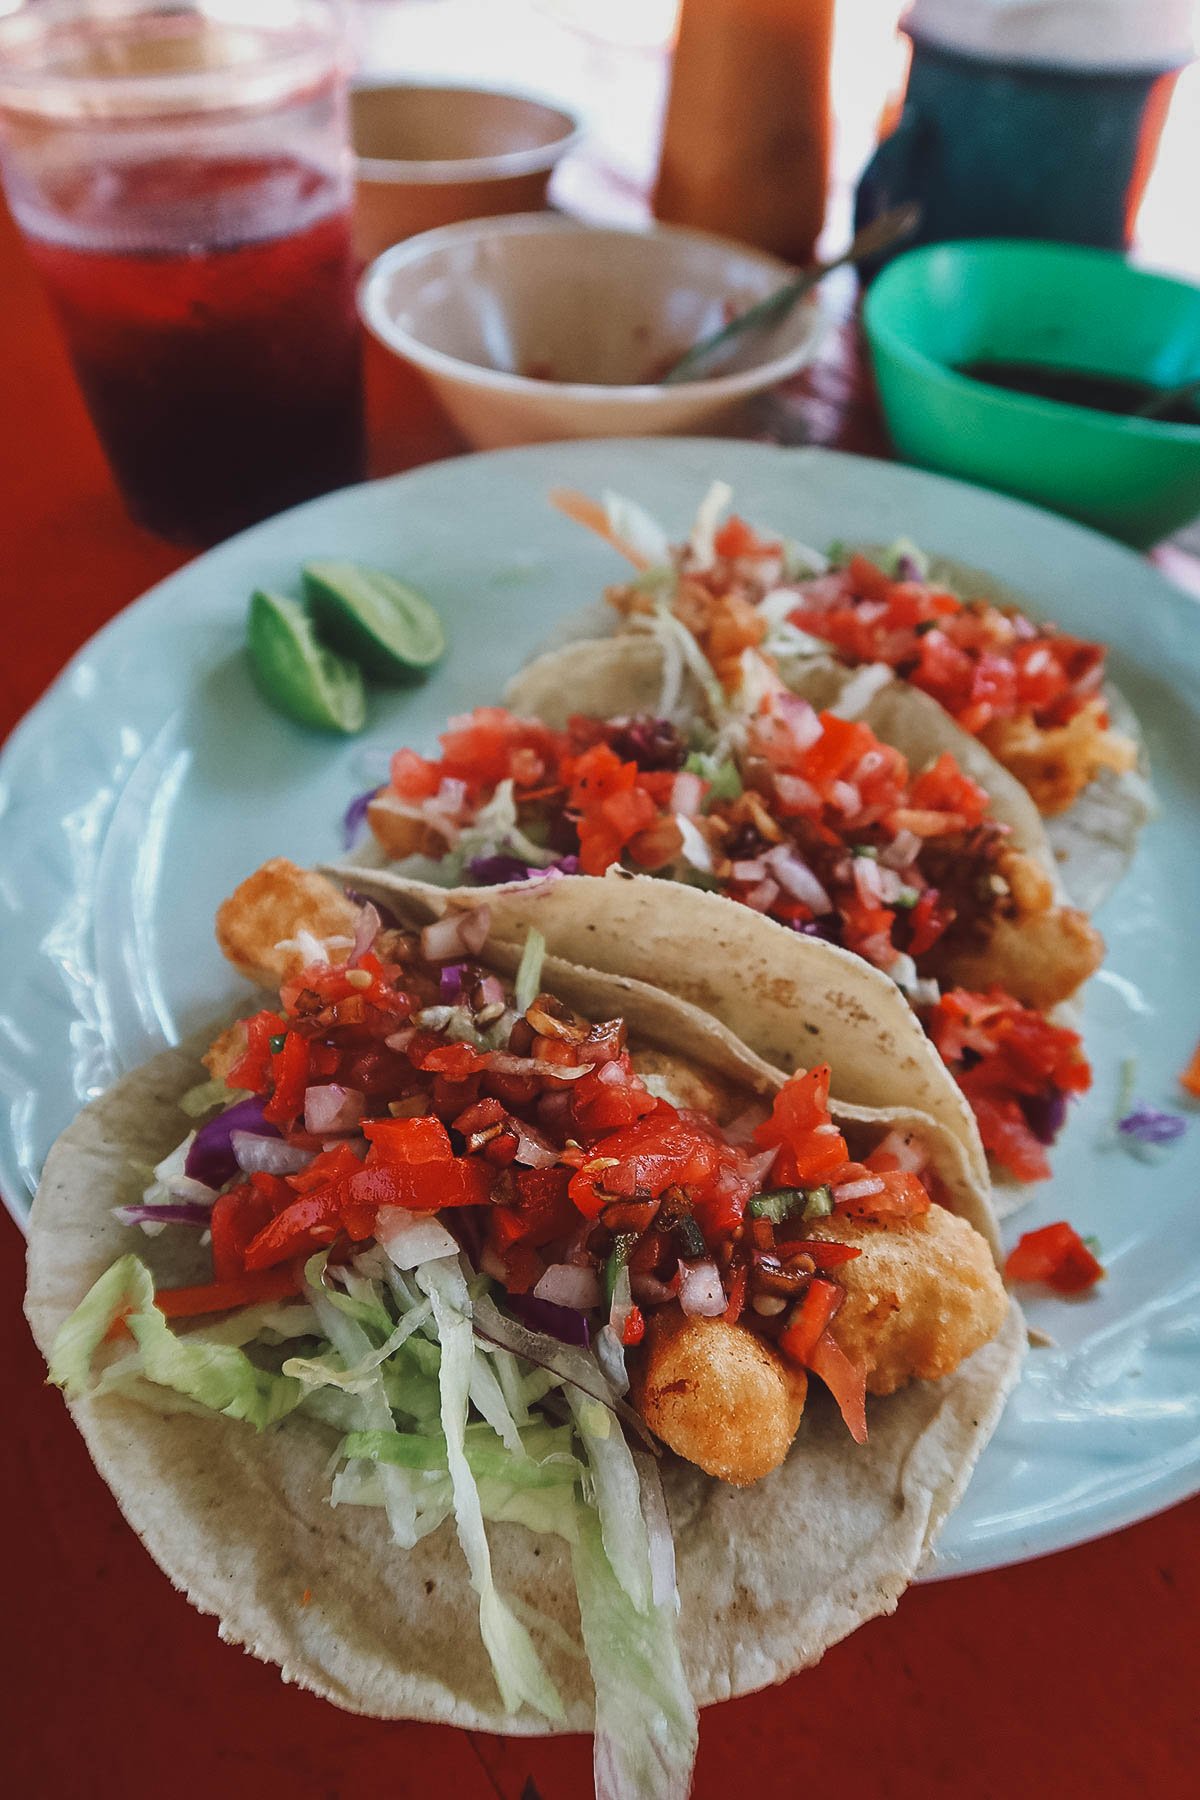 Trio of fish tacos served with pico de gallo, lettuce, and sour cream sauce